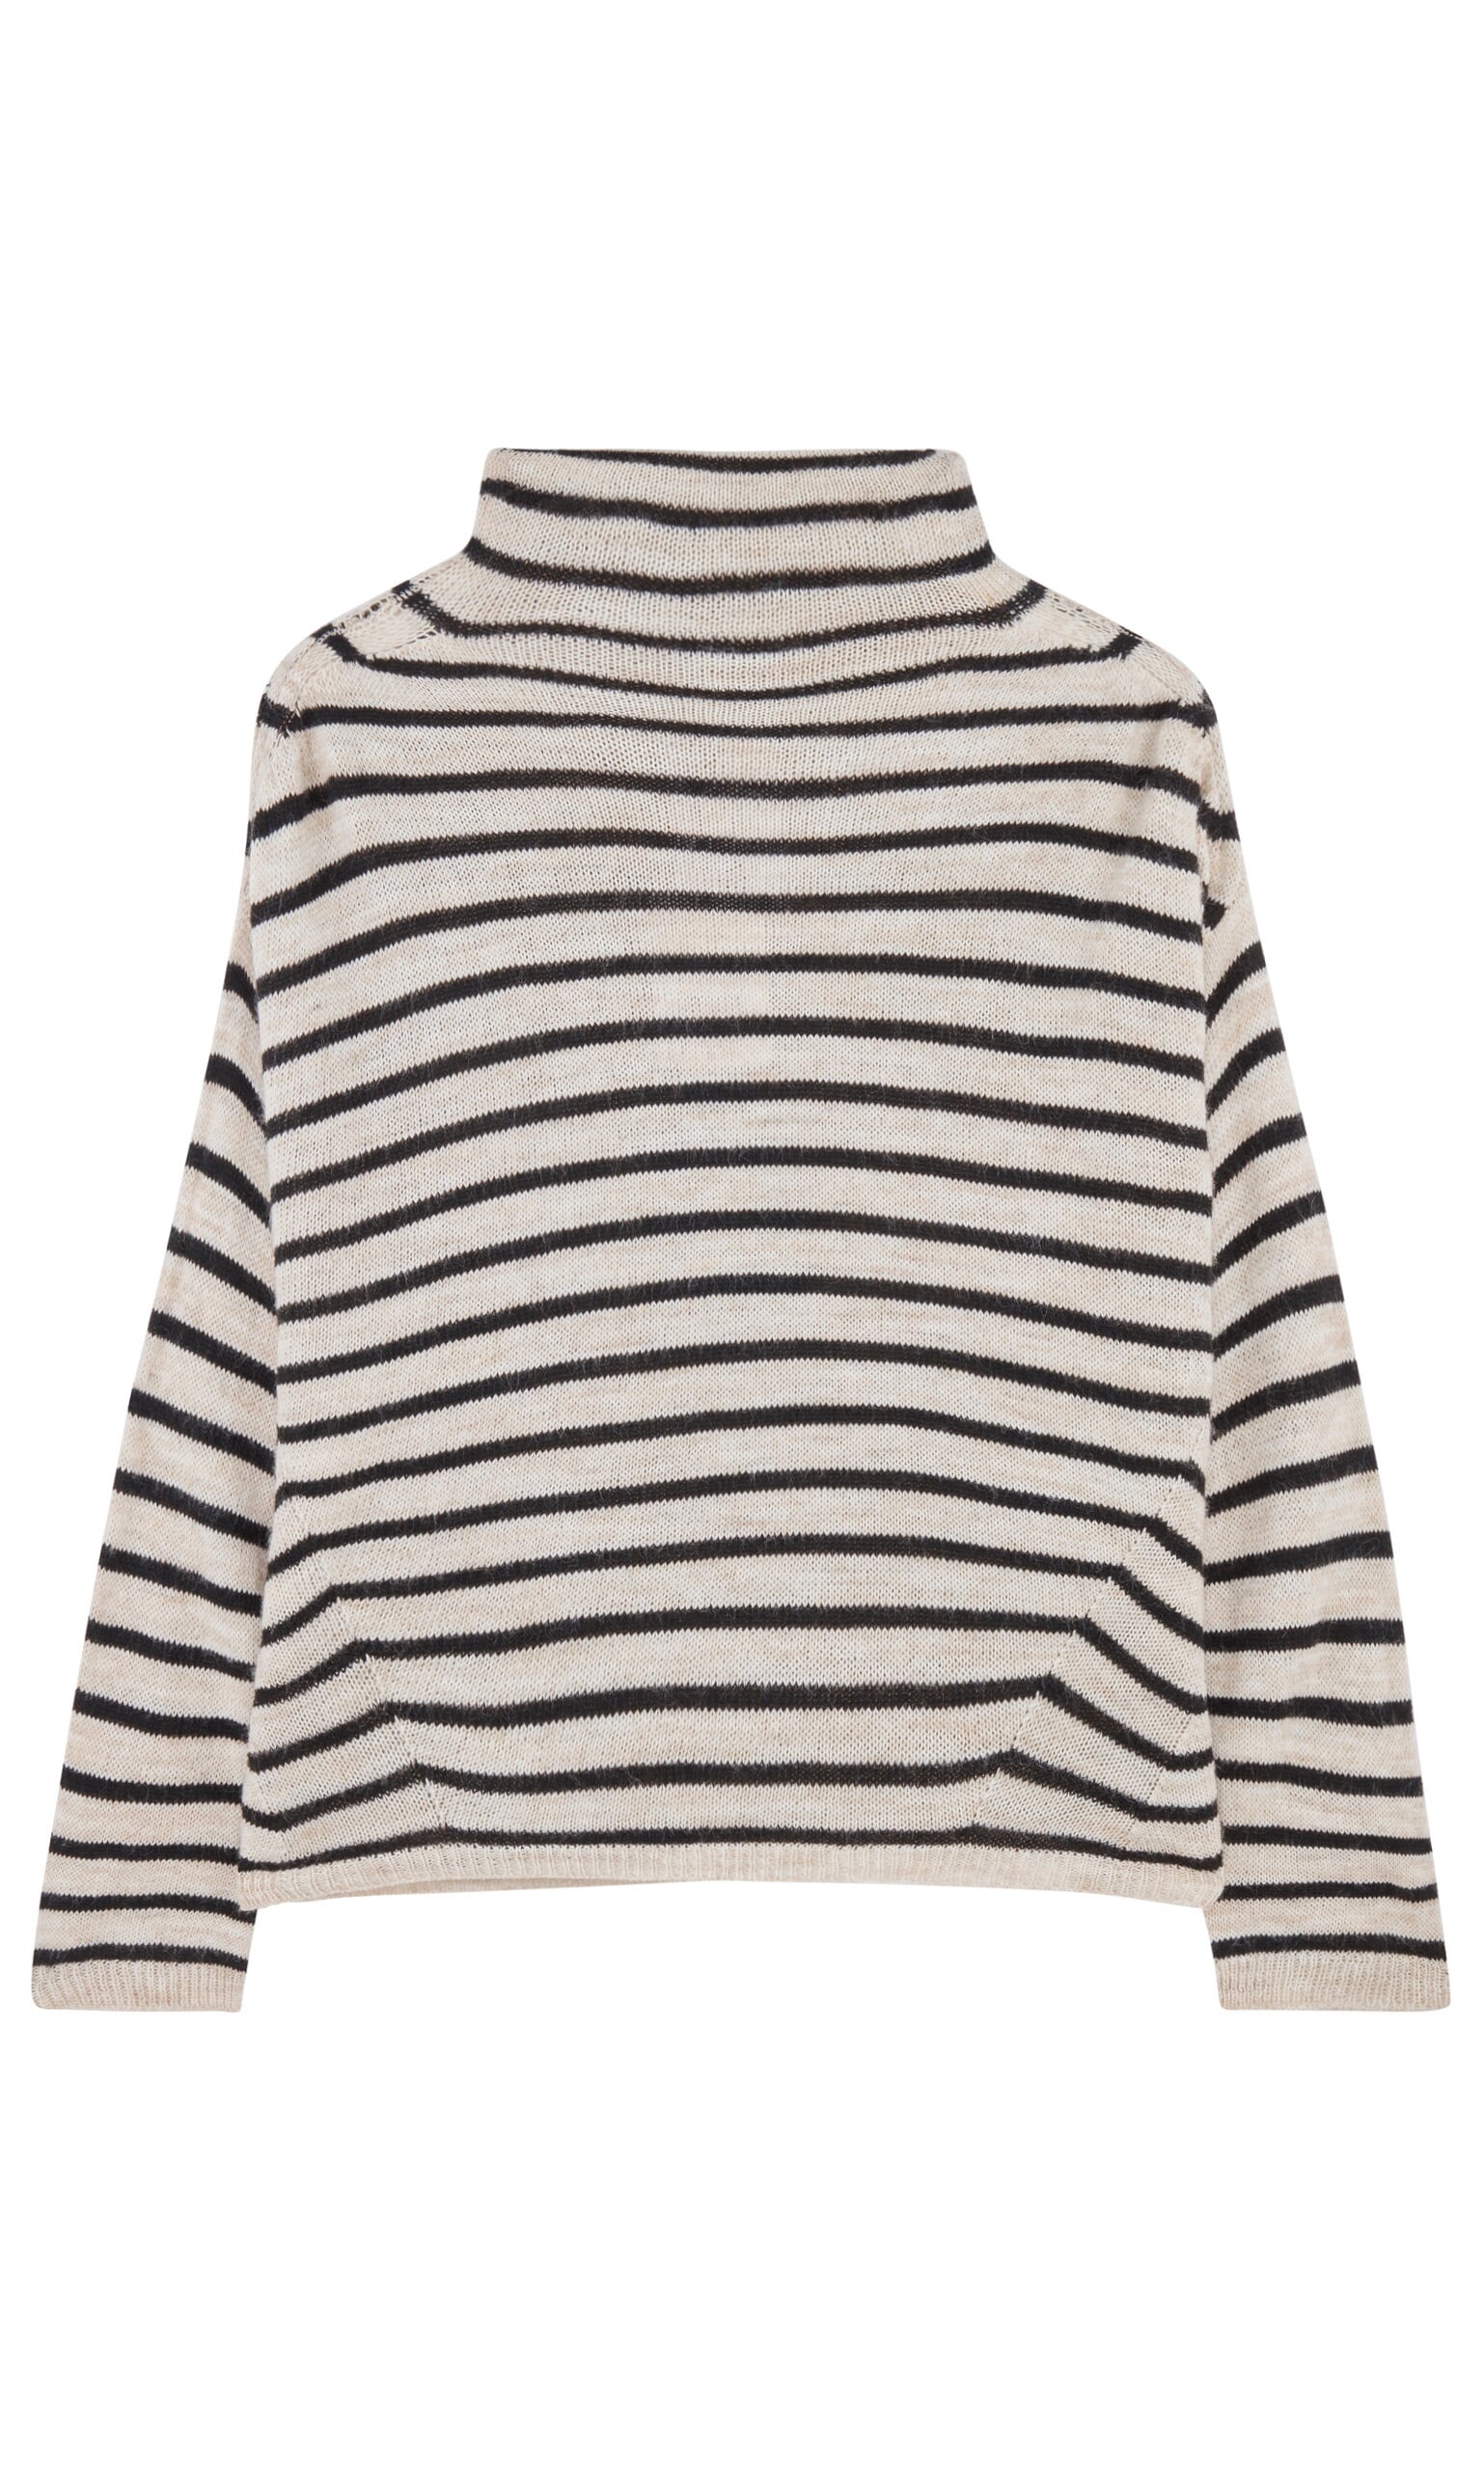 November sweater - Plümo Ltd